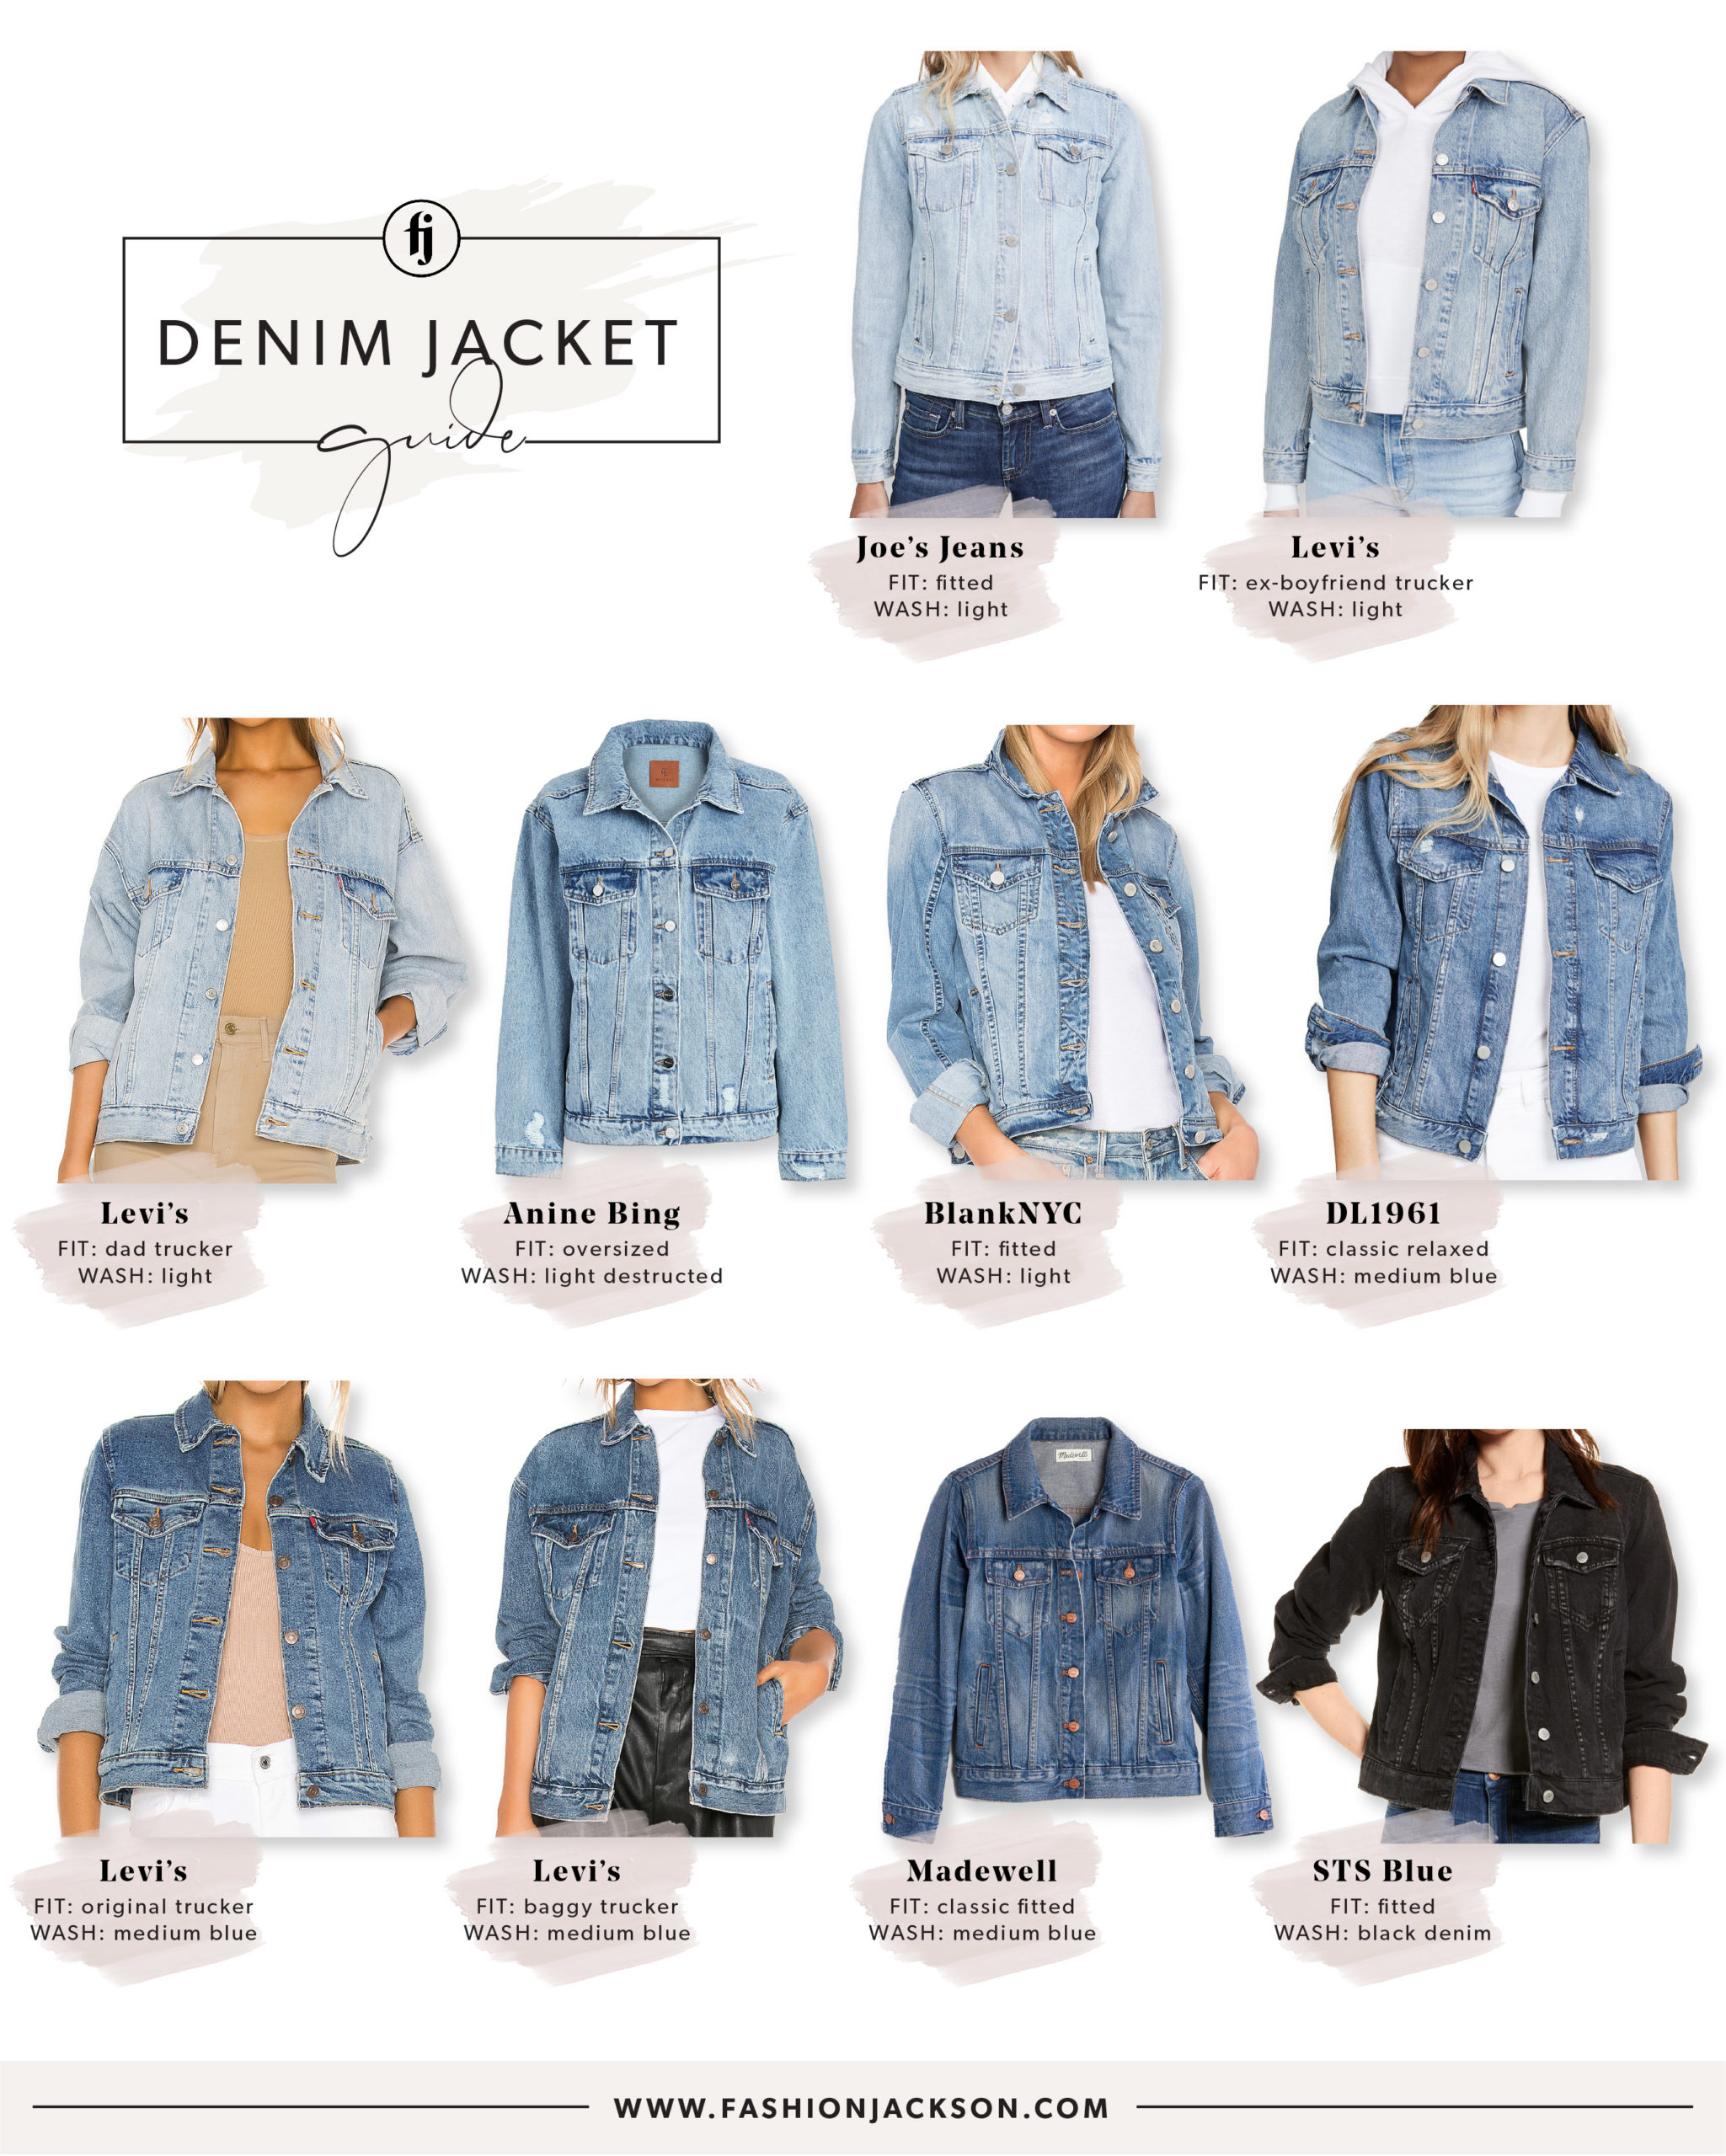 Direct Verrast beven Denim Jacket Guide: My Favorite Jean Jacket Styles - Fashion Jackson